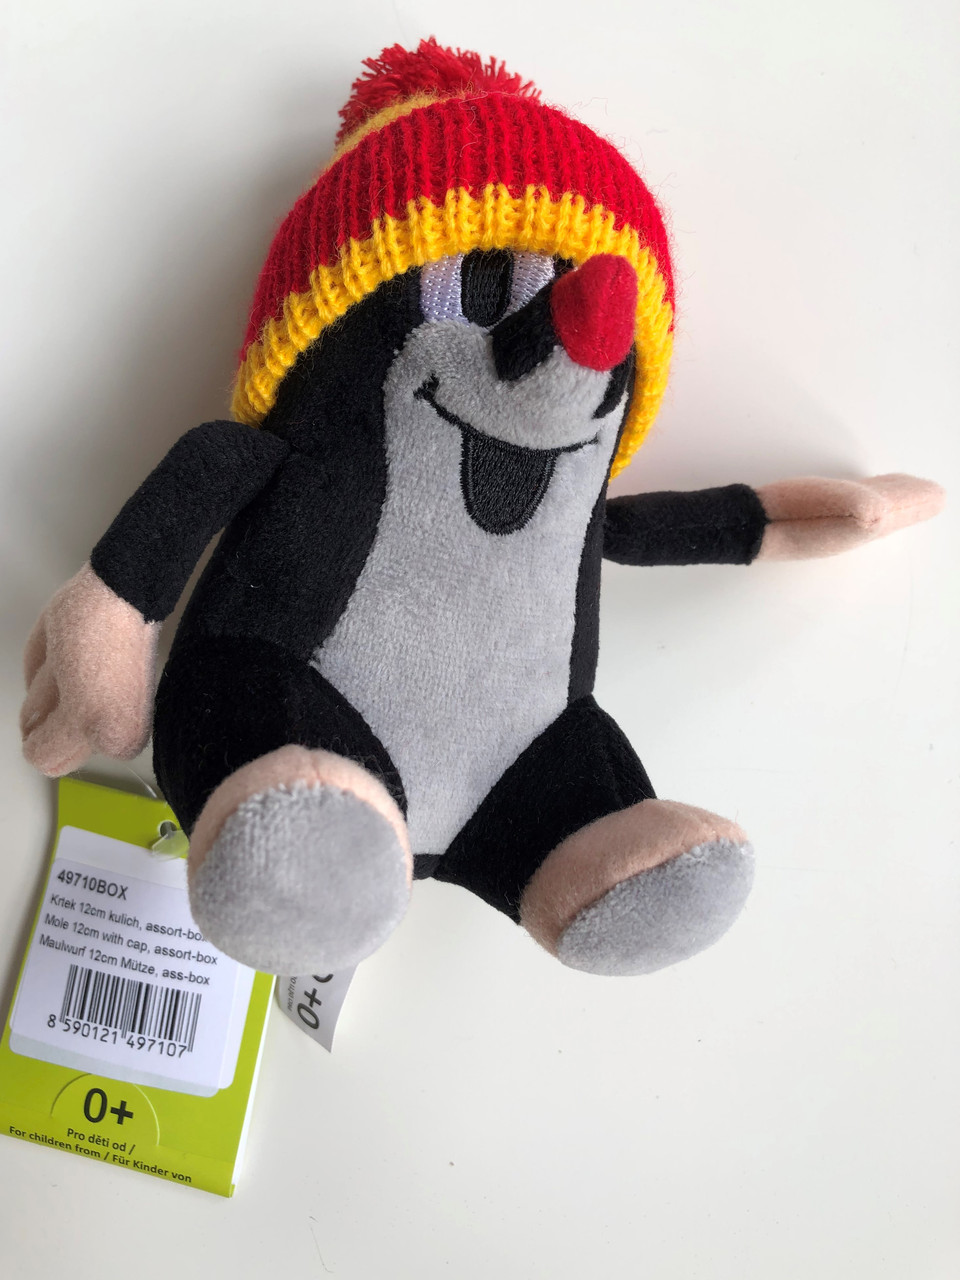 The Little Mole with red & yellow hat 12 cm plush toy / Krtek - Krteček 12  cm kulich / Der klein Maulwurf rot & gelb kappe / Kisvakond Piros-sárga  téli sapkával / Ages 0+ - bibleinmylanguage